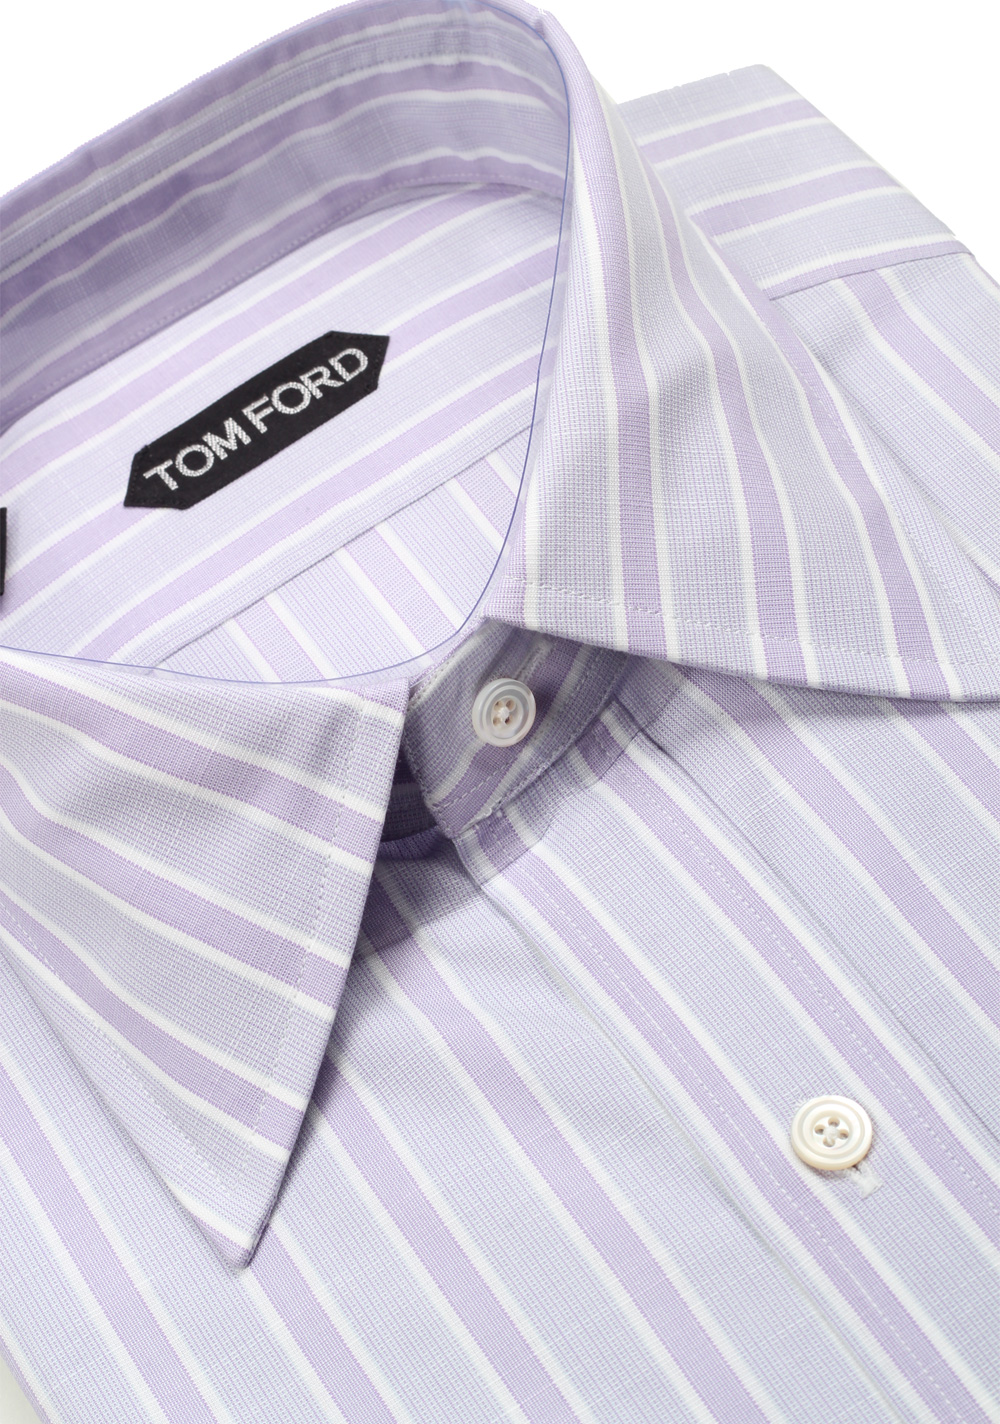 TOM FORD Striped Purple High Collar Dress Shirt Size 40 / 15,75 U.S. | Costume Limité